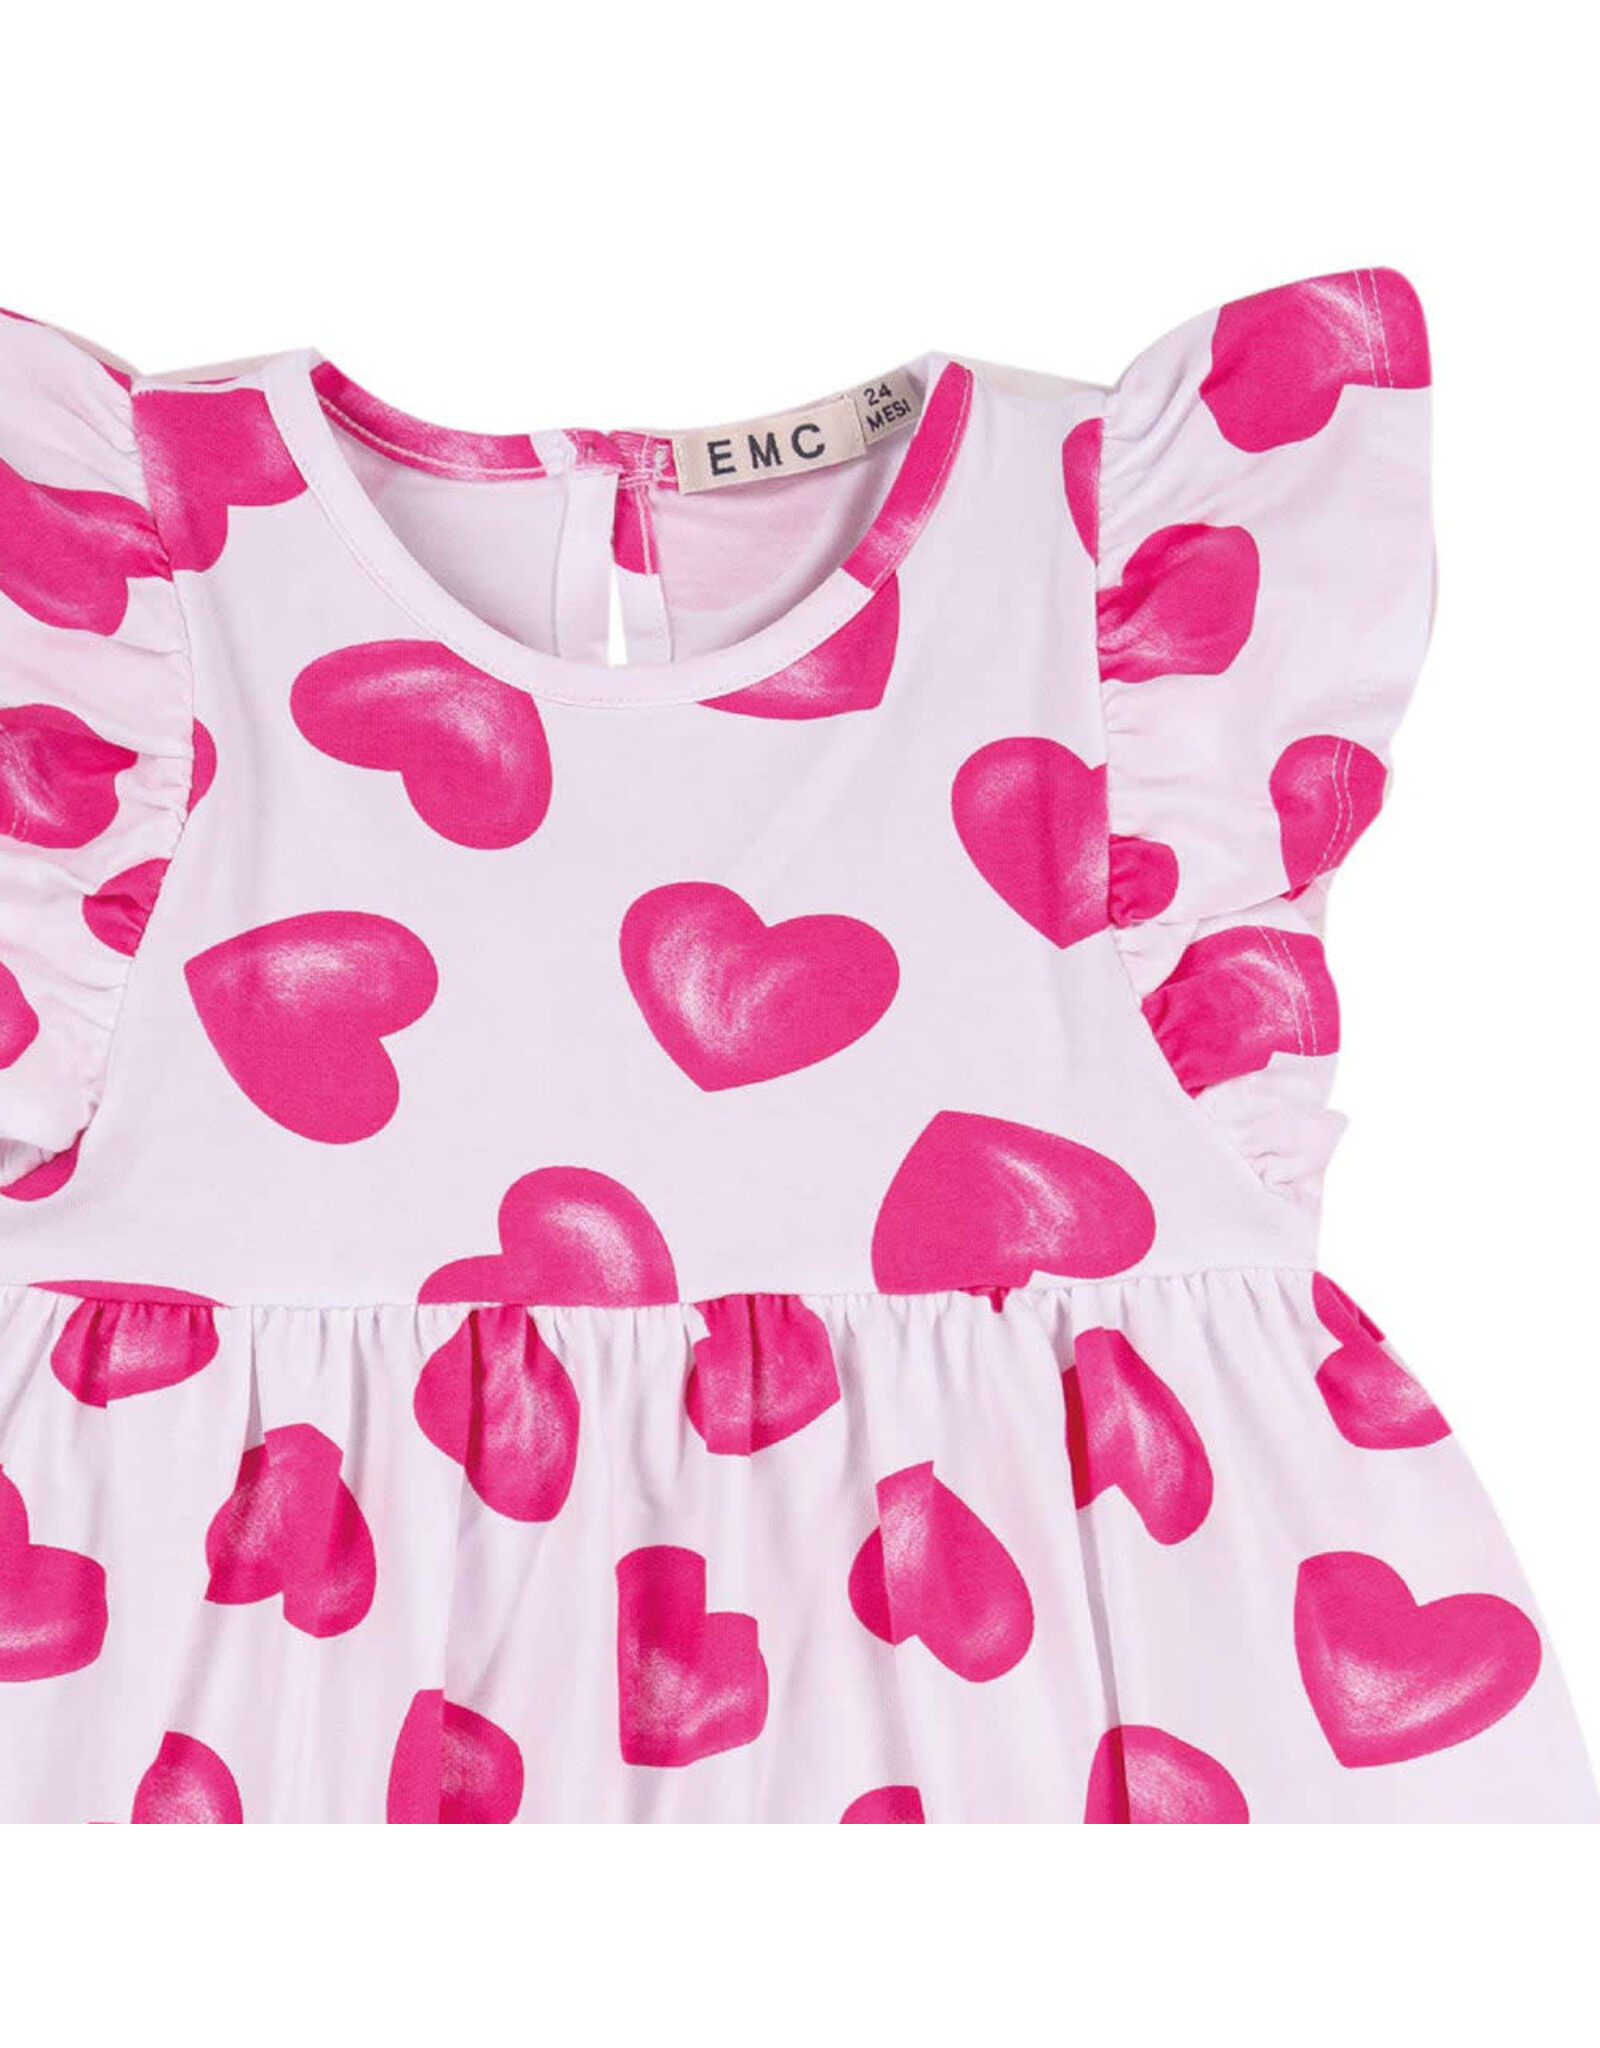 EMC Pink Hearts Printed Jersey Dress